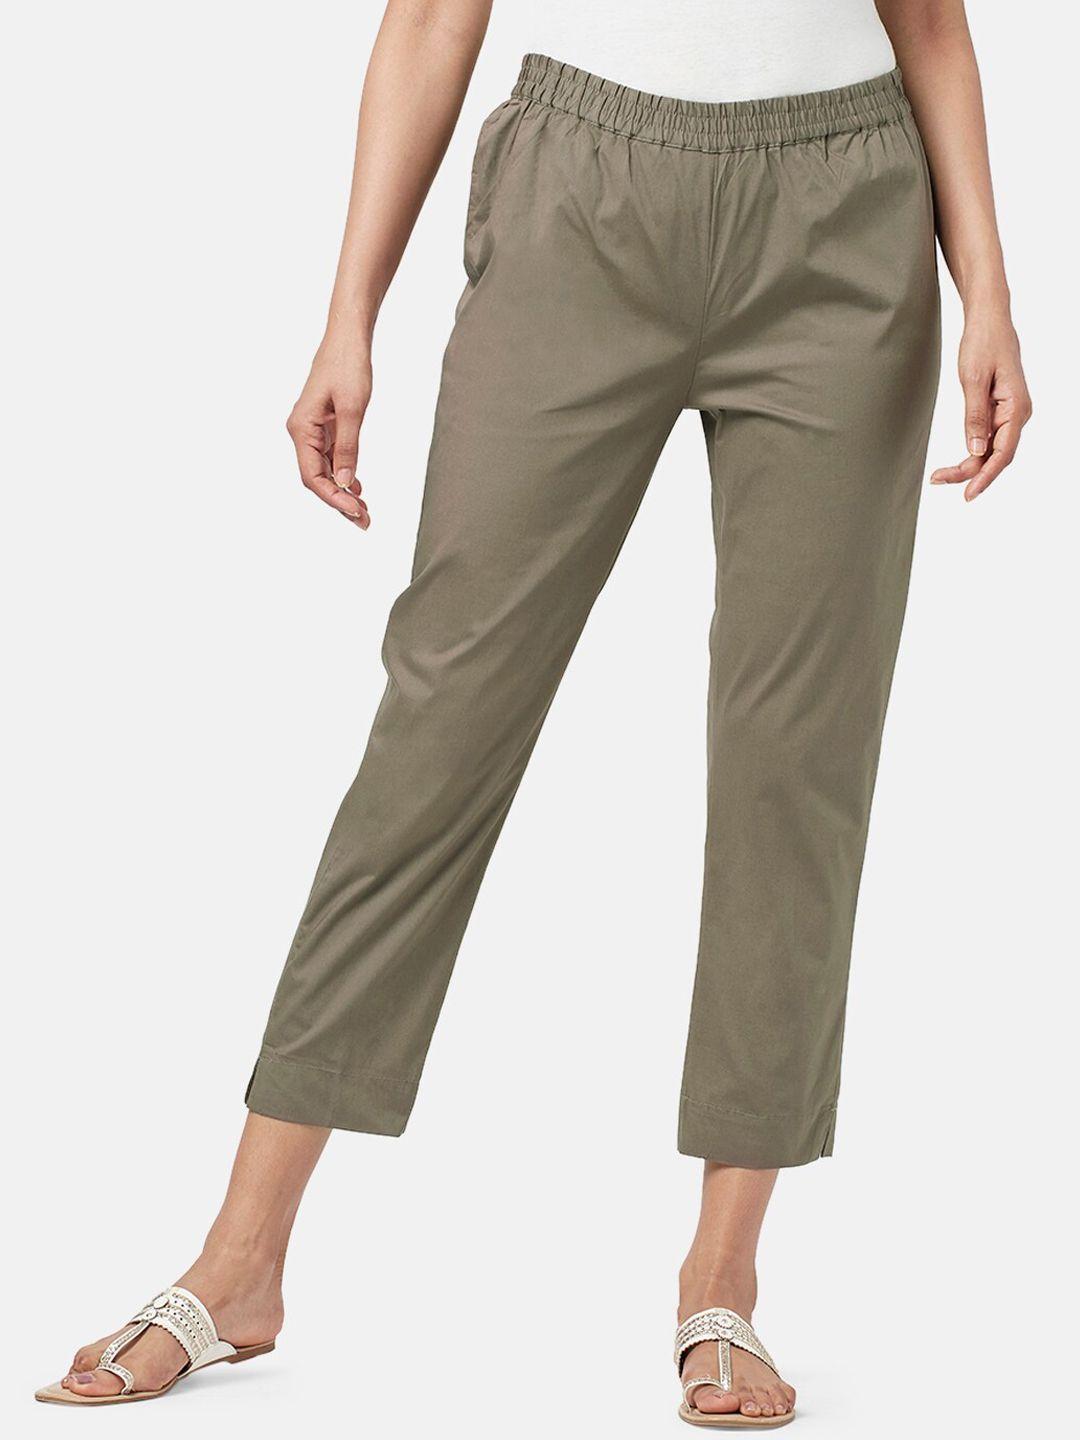 rangmanch-by-pantaloons-women-mid-rise-cotton-trousers